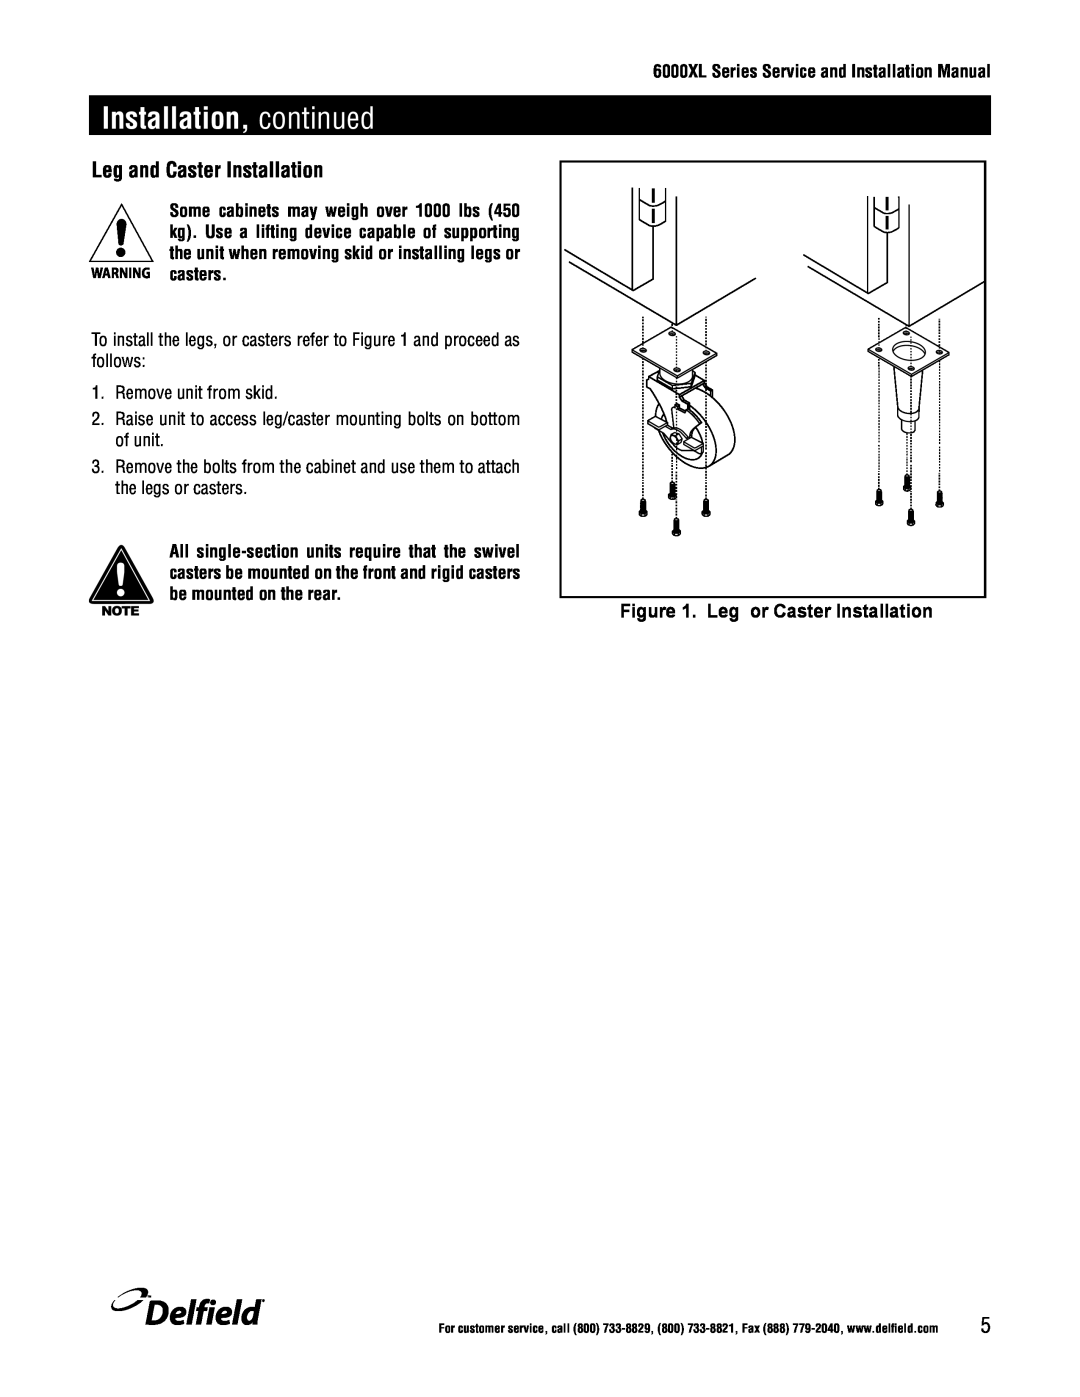 Delfield 6100XL manual Installation, continued, Leg and Caster Installation, Delfield, Leg or Caster Installation 